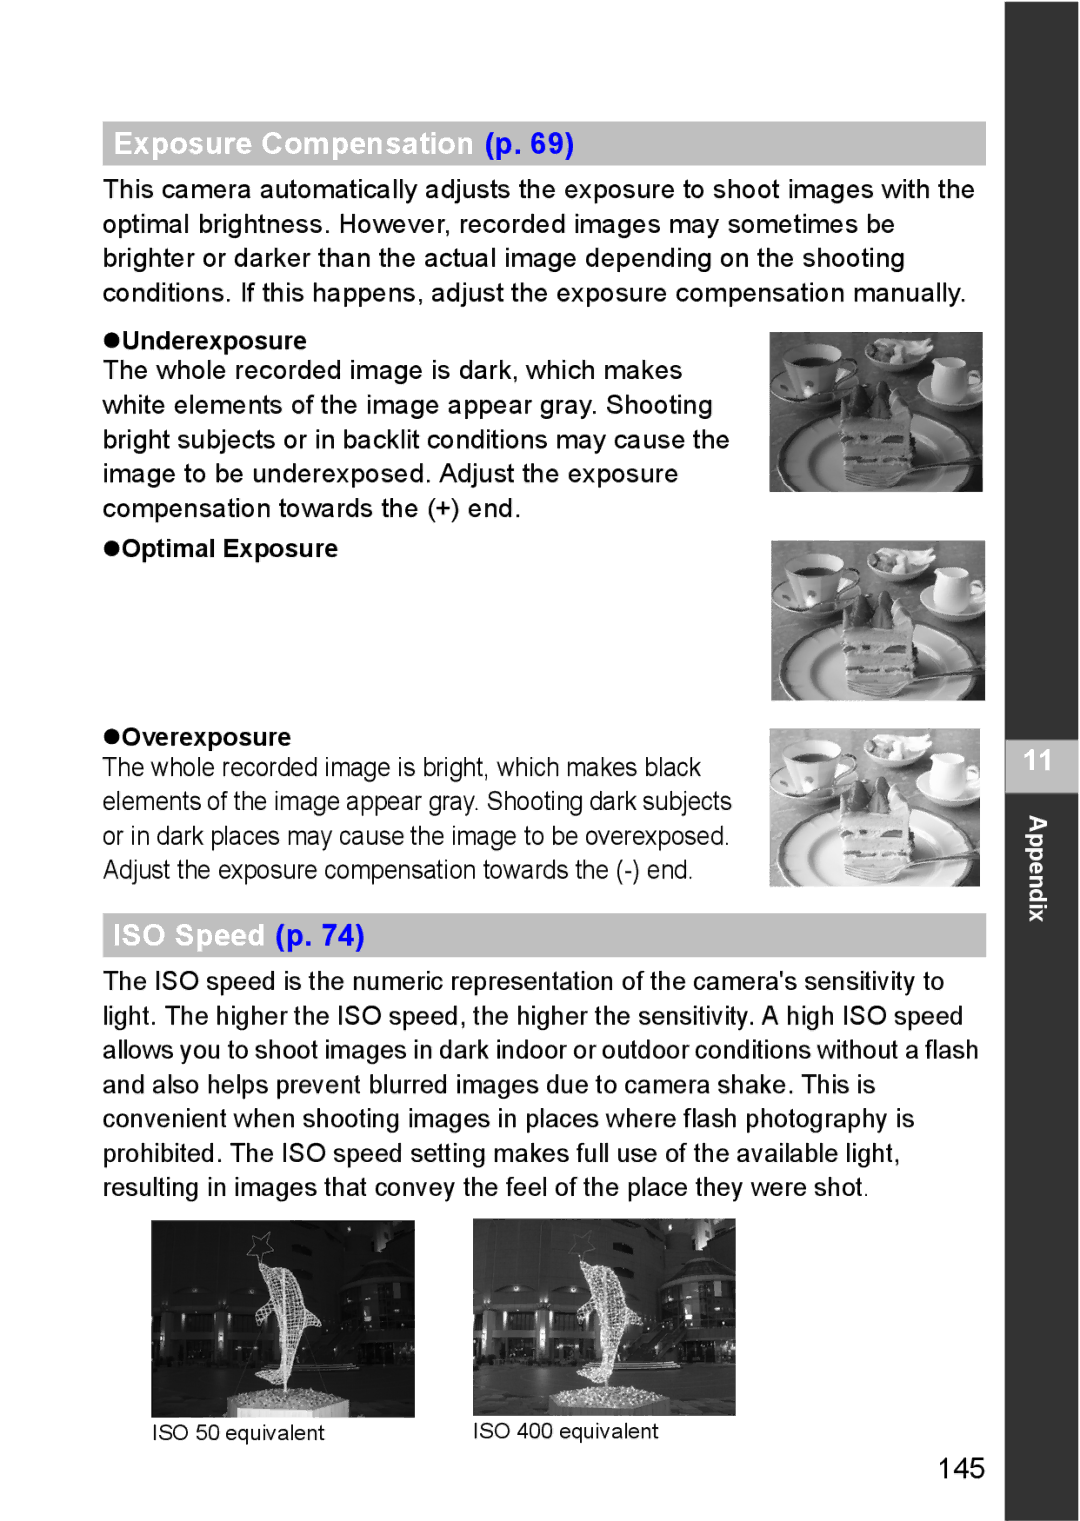 Canon S80 manual Exposure Compensation p, ISO Speed p, 145, ZUnderexposure, ZOptimal Exposure ZOverexposure 